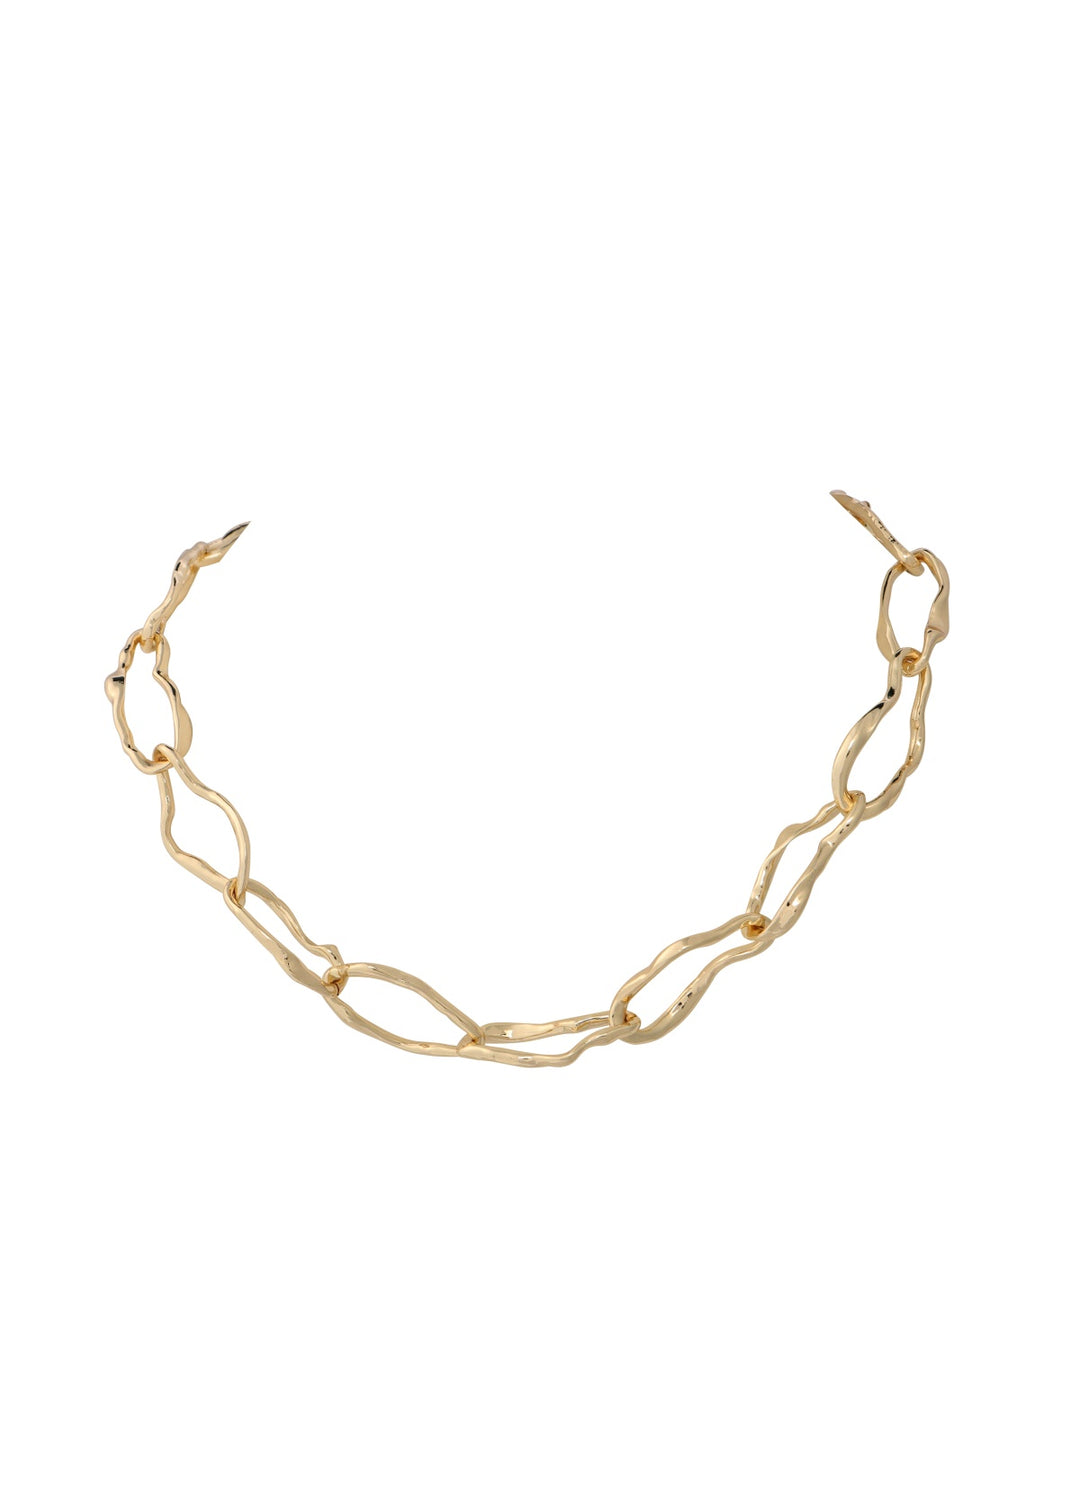 Merx - Hammered Chain Necklace